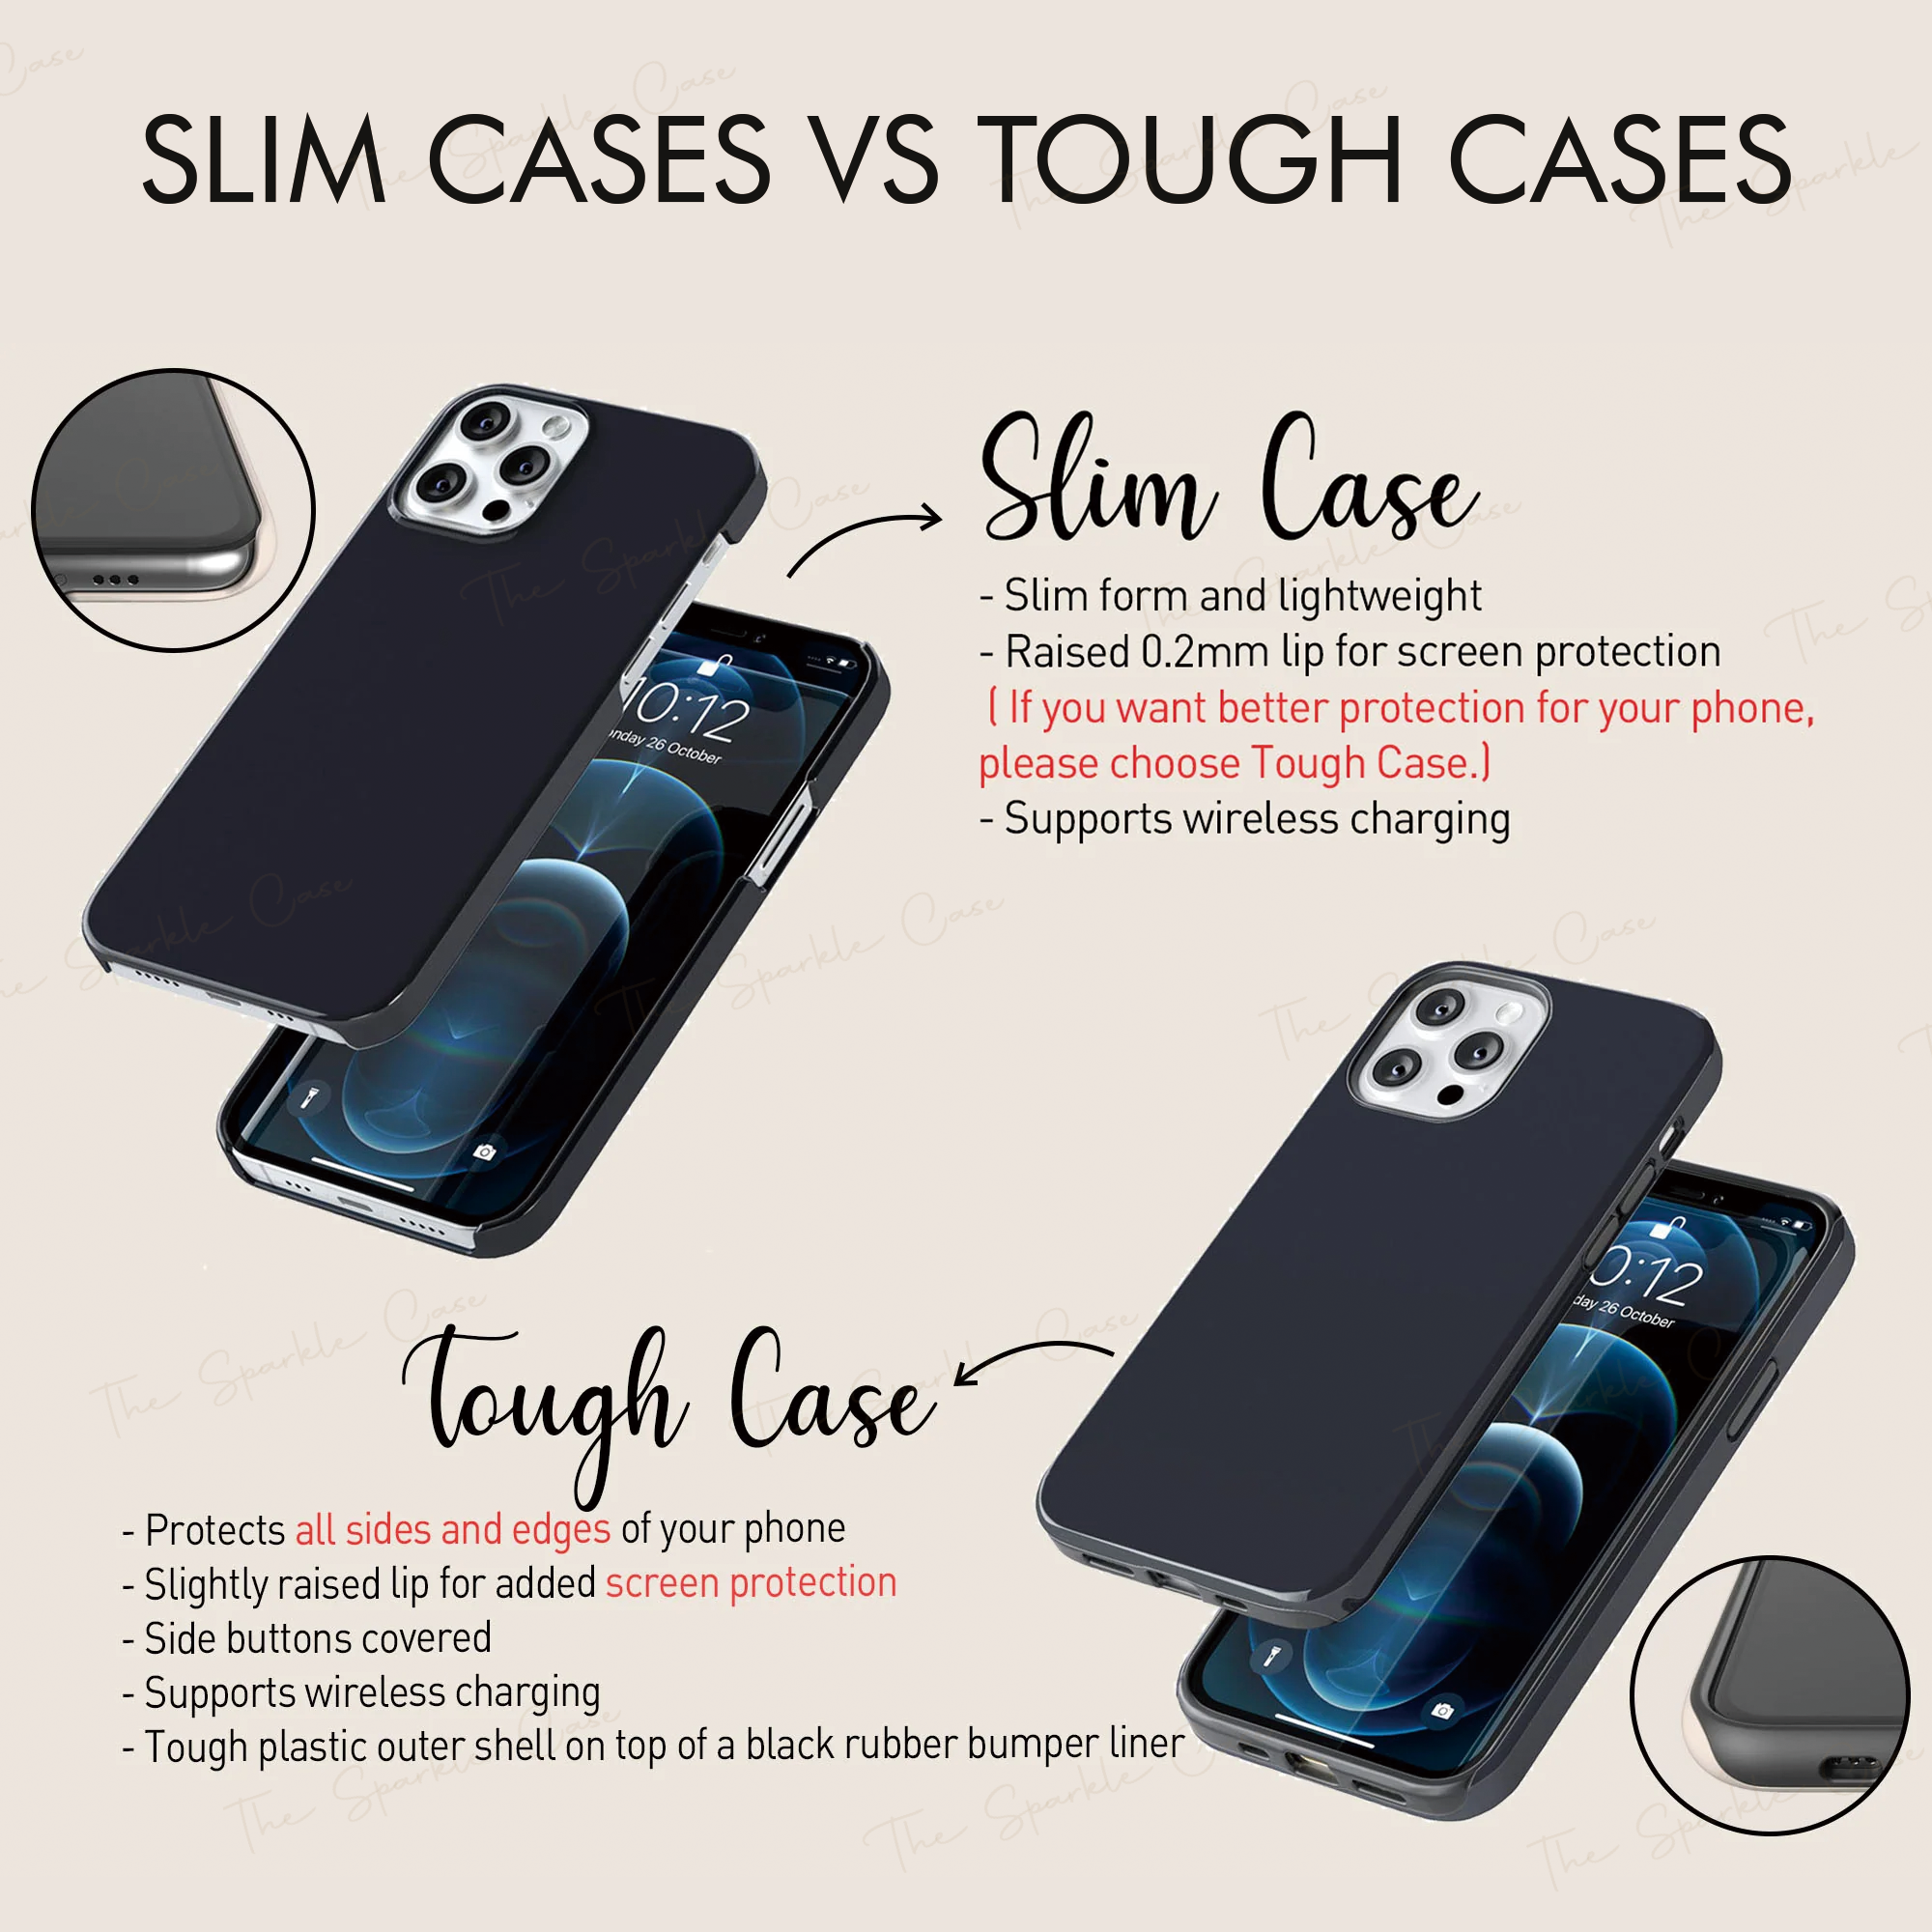 Boho Protective Minimalist Art Phone Case, iPhone, Samsung